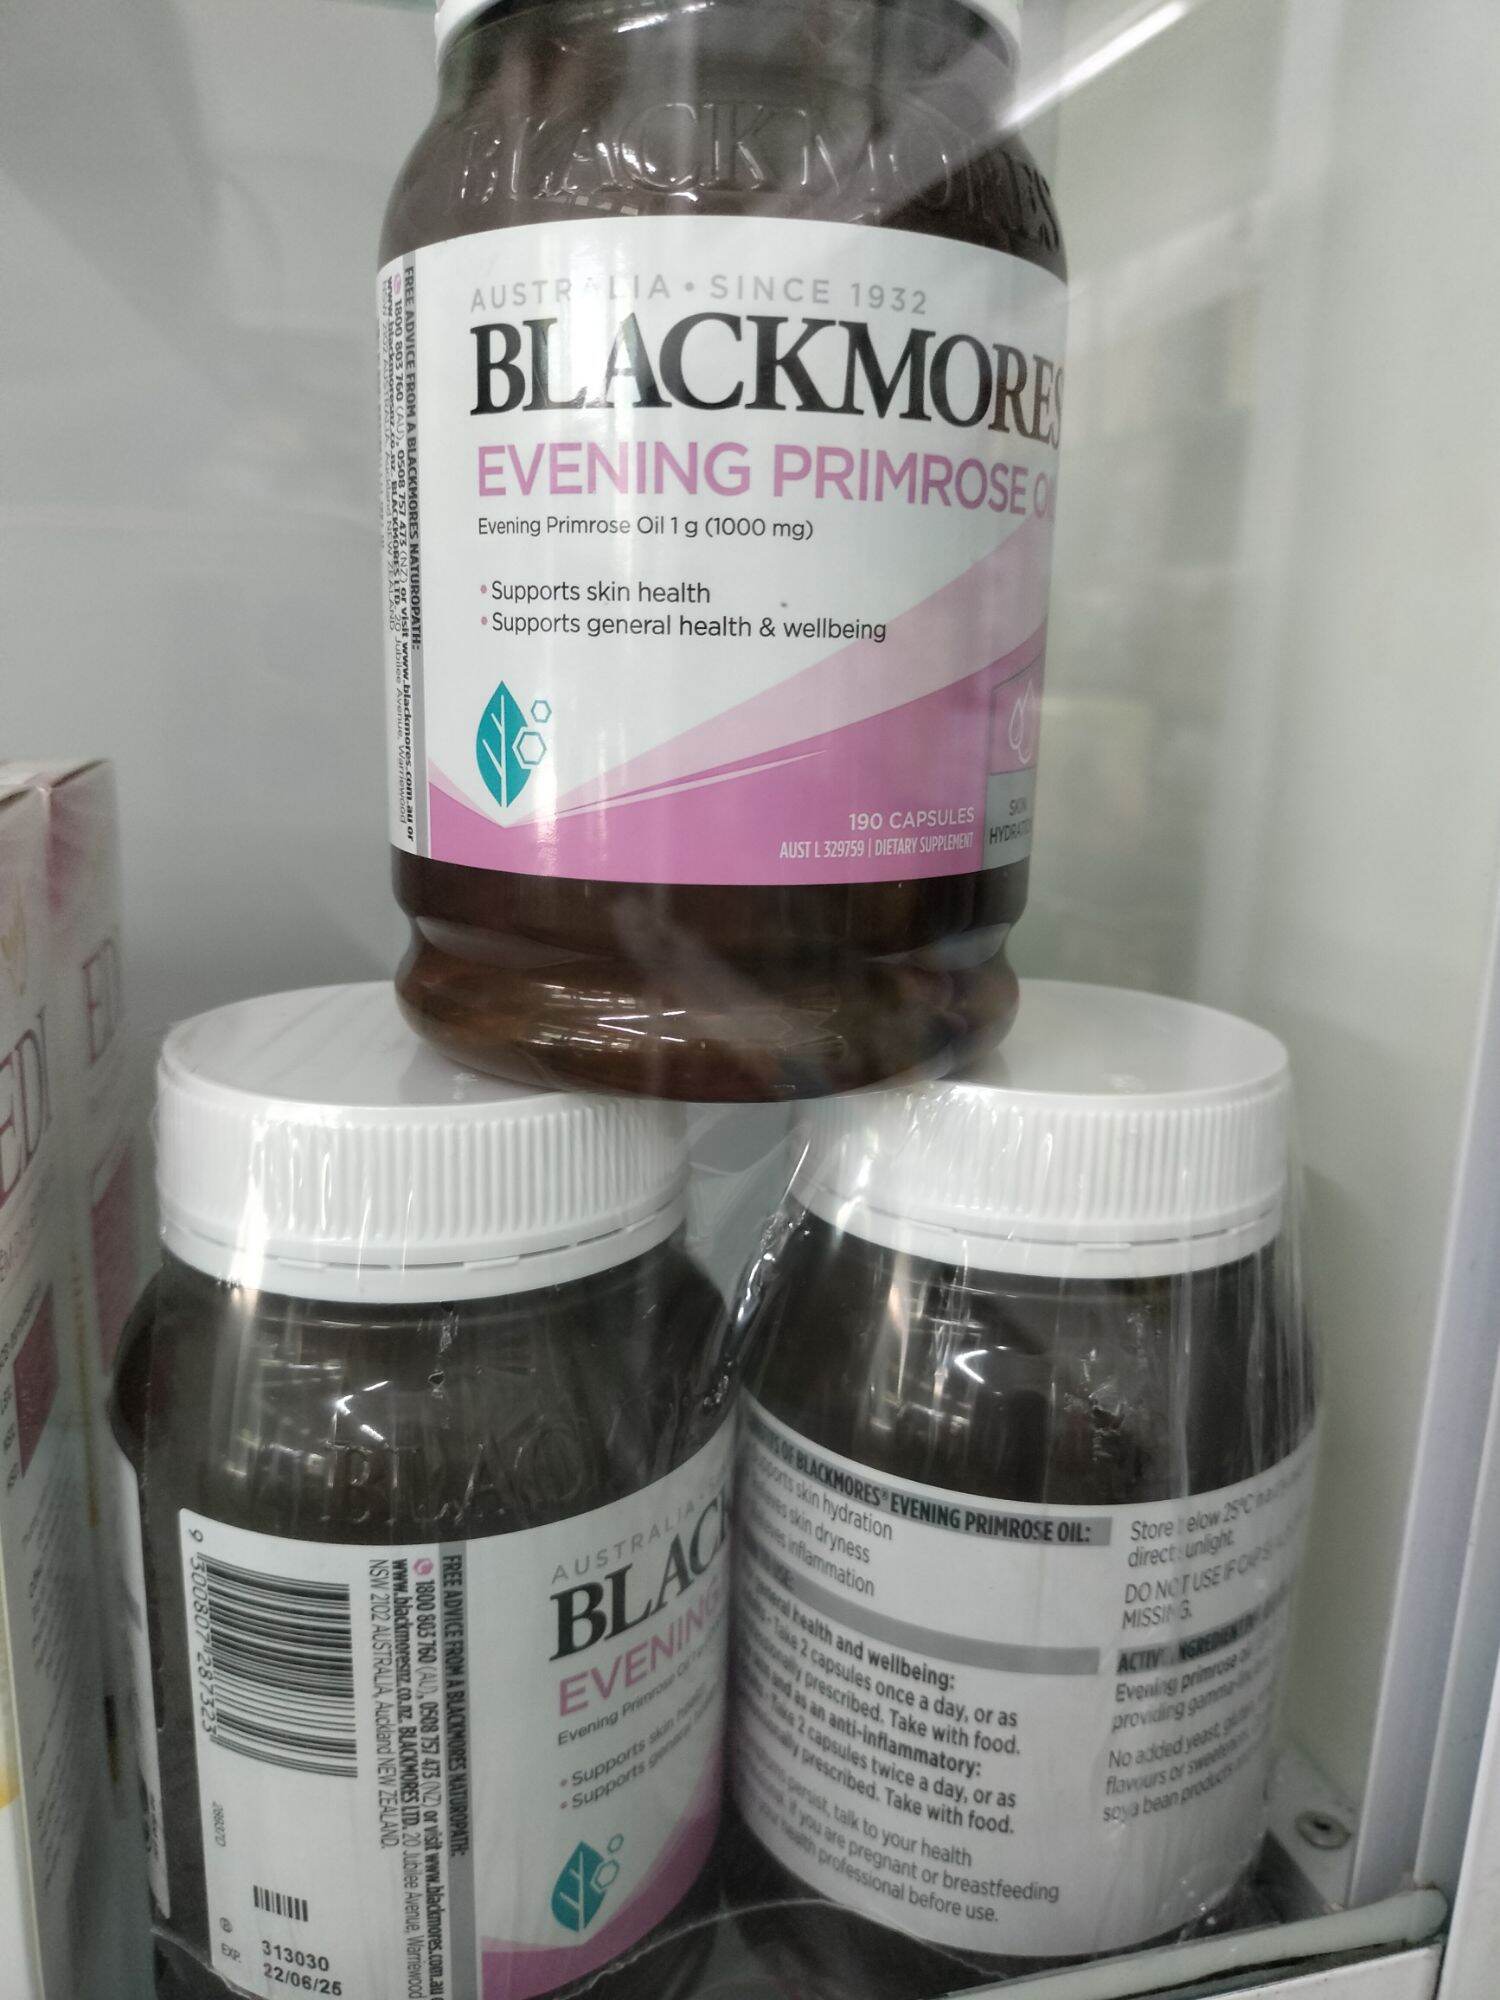 Blackmove evening primrose oil 1000 mg